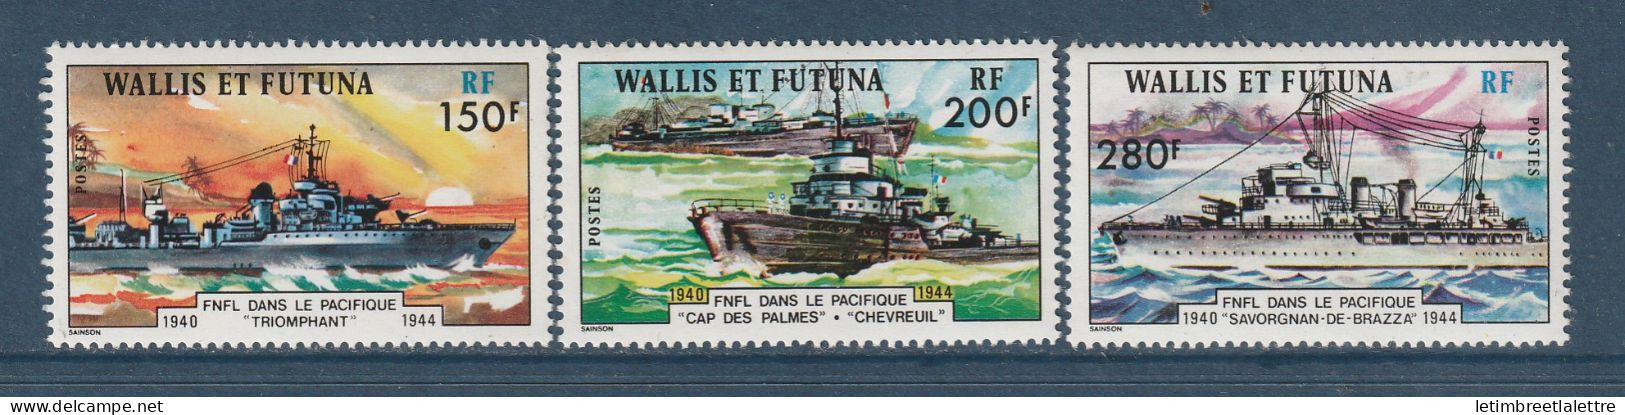 Wallis Et Futuna - YT N° 210 à 212 ** - Neuf Sans Charnière - 1978 - Ungebraucht